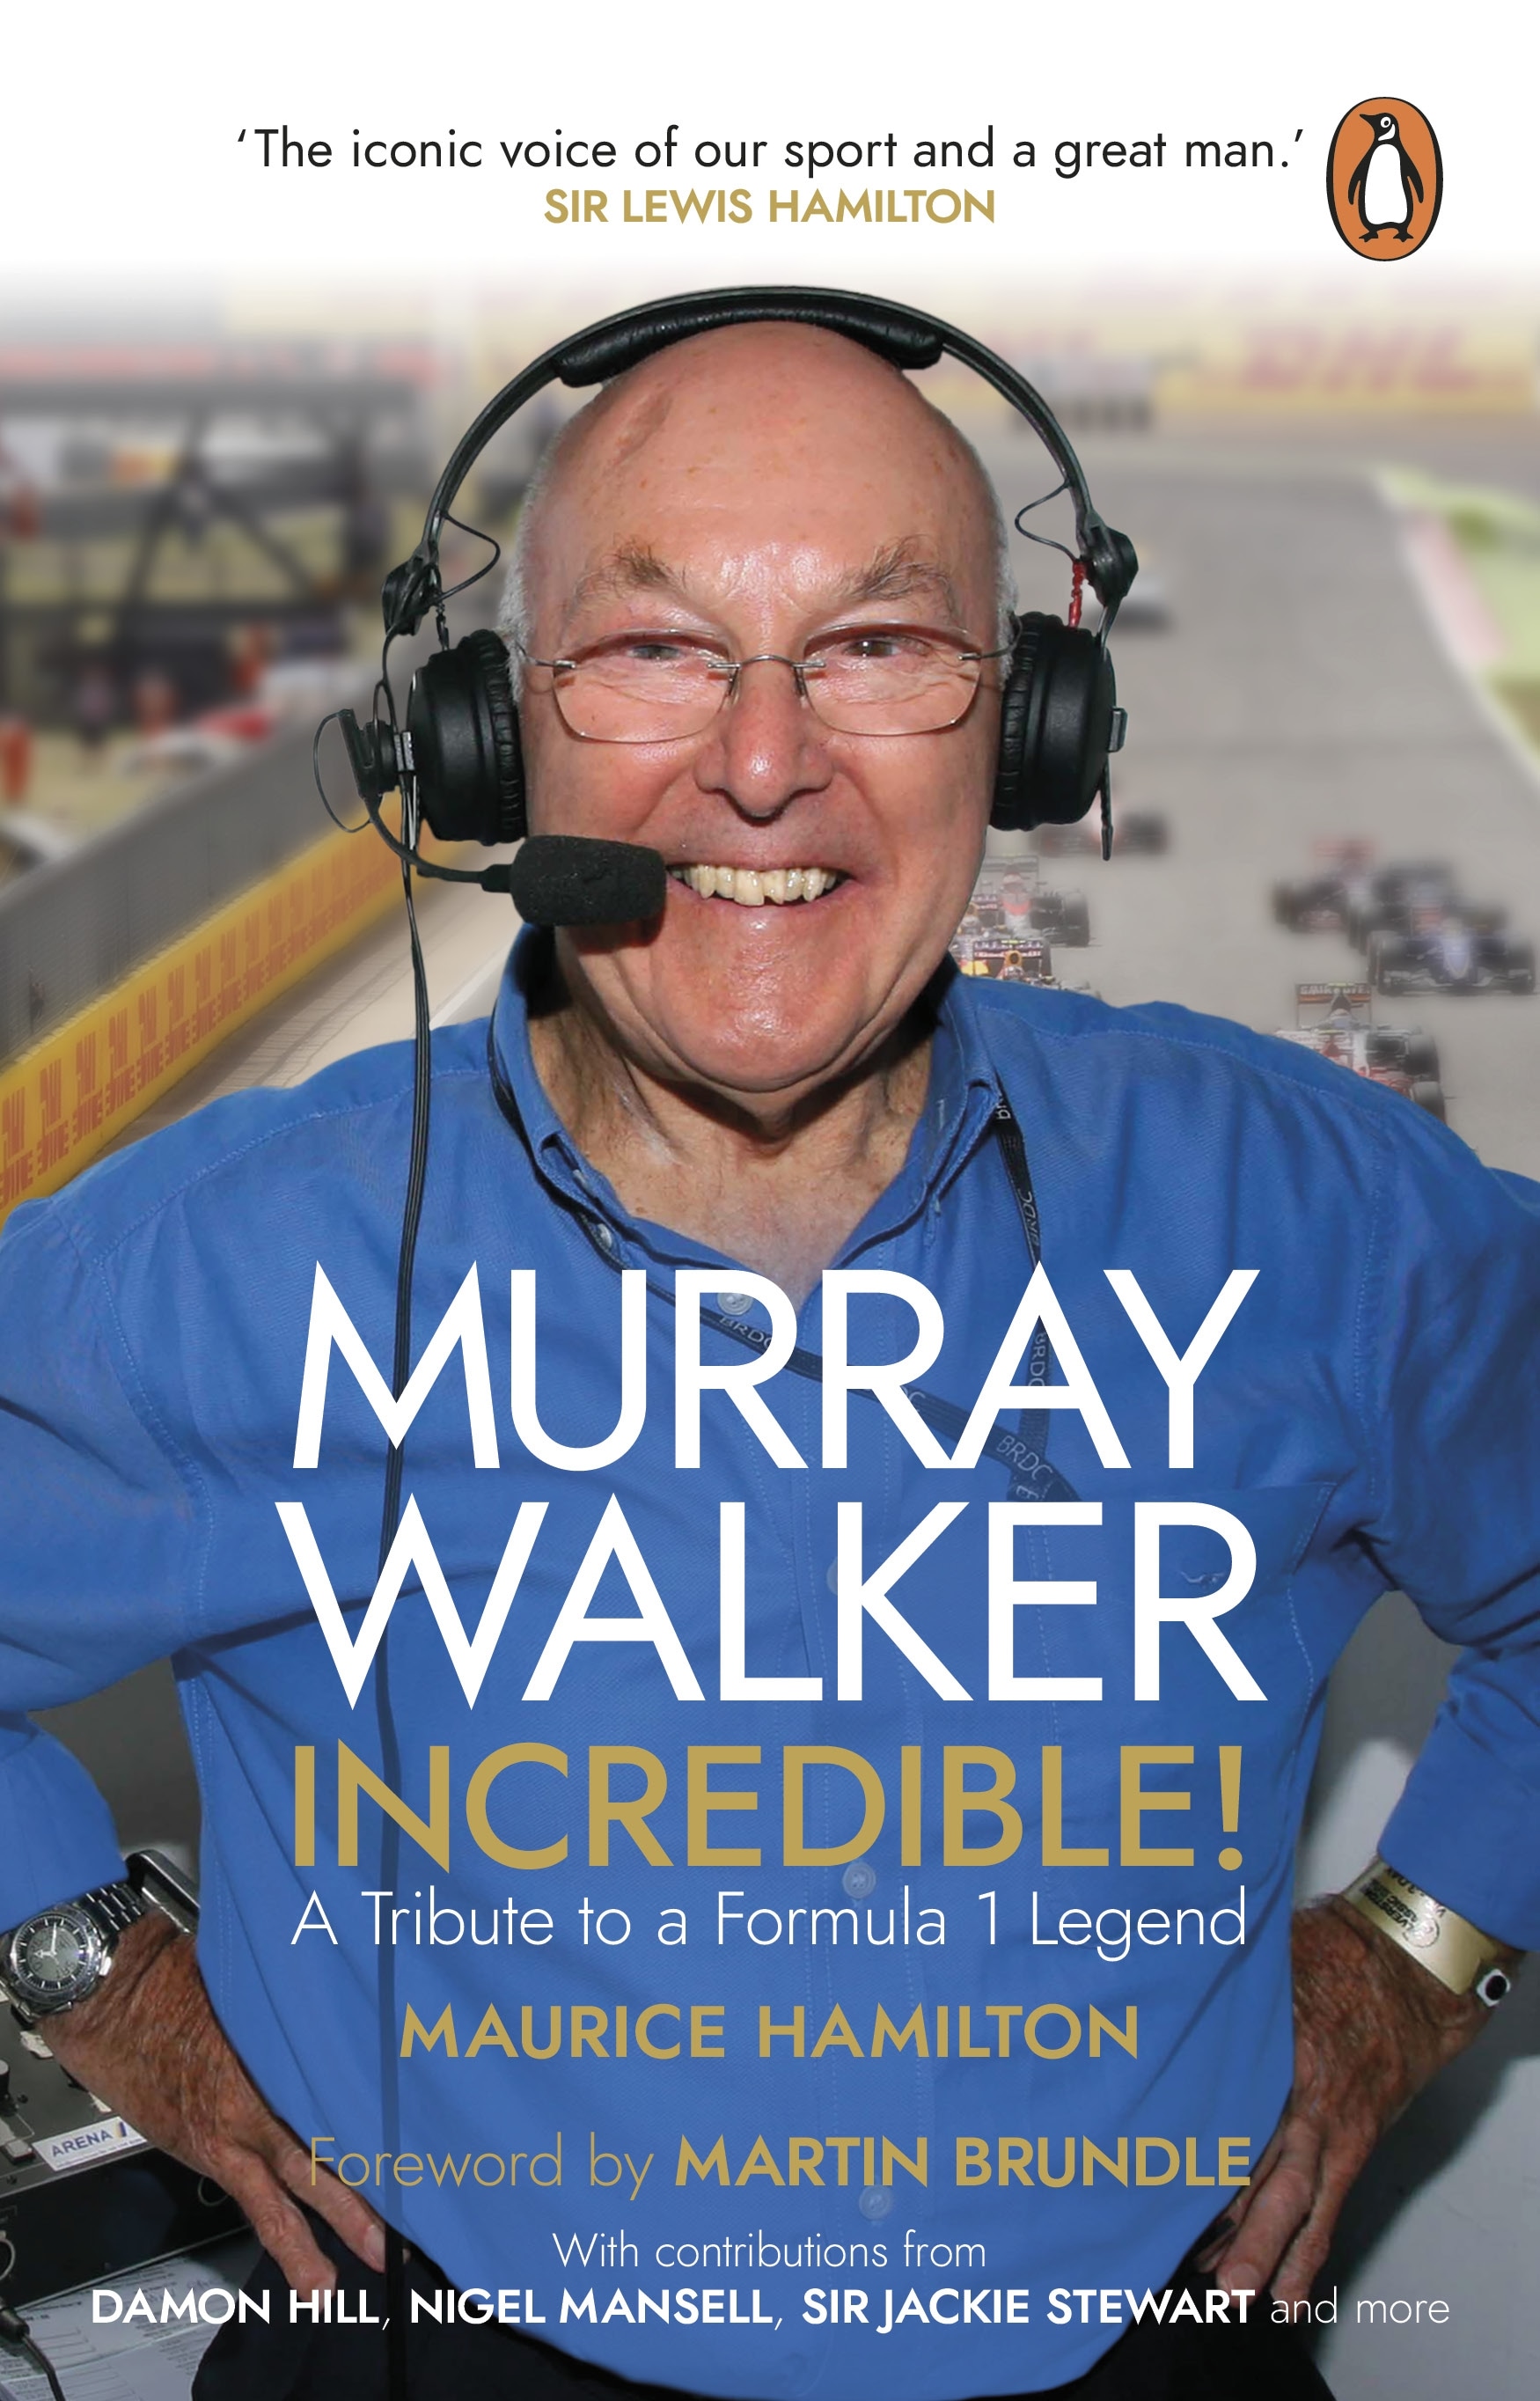 Book “Murray Walker: Incredible!” by Maurice Hamilton — June 16, 2022